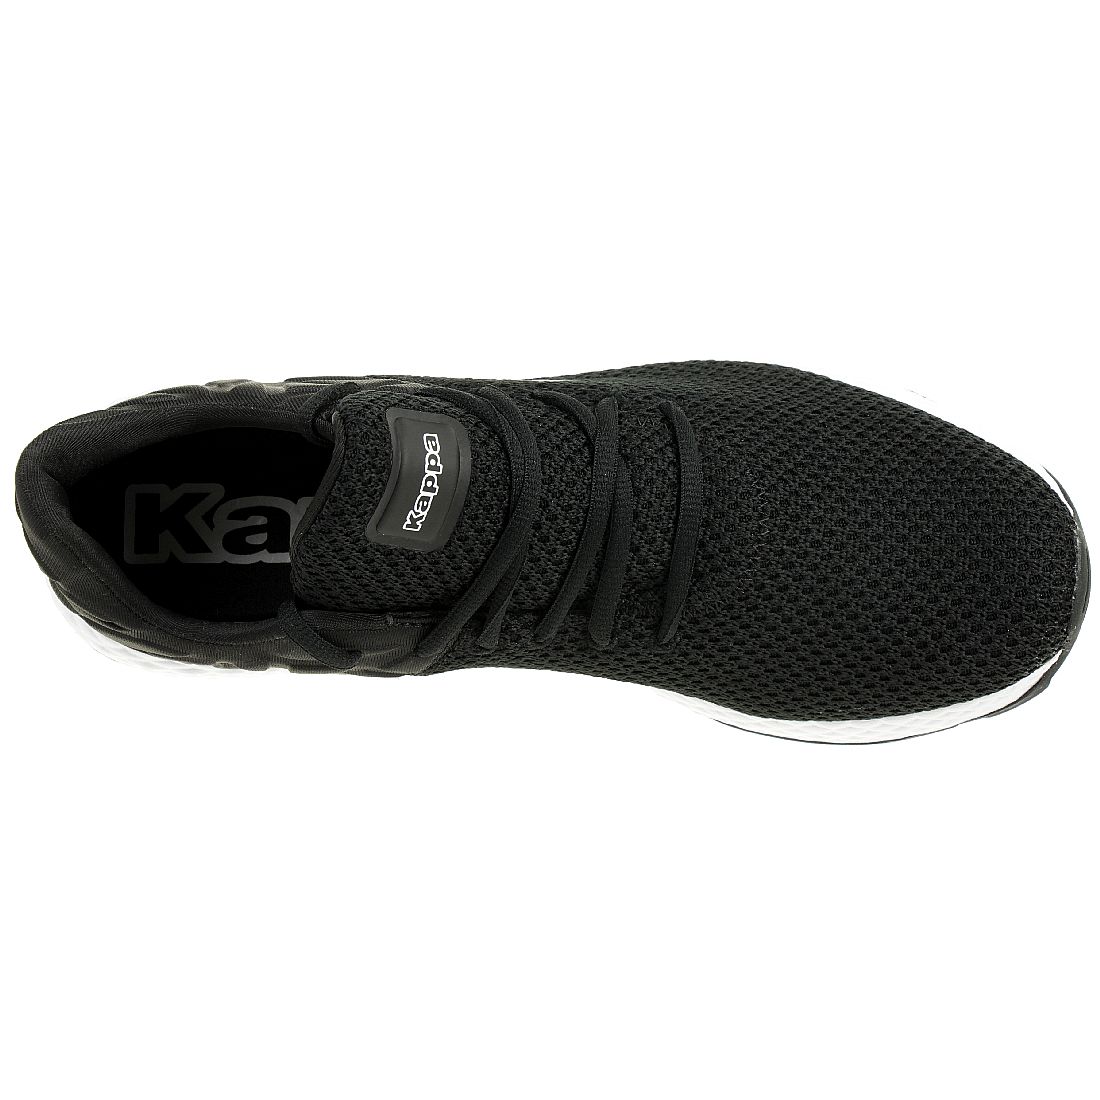 Kappa Hector Sneaker Unisex Turnschuhe Schuhe schwarz 242768